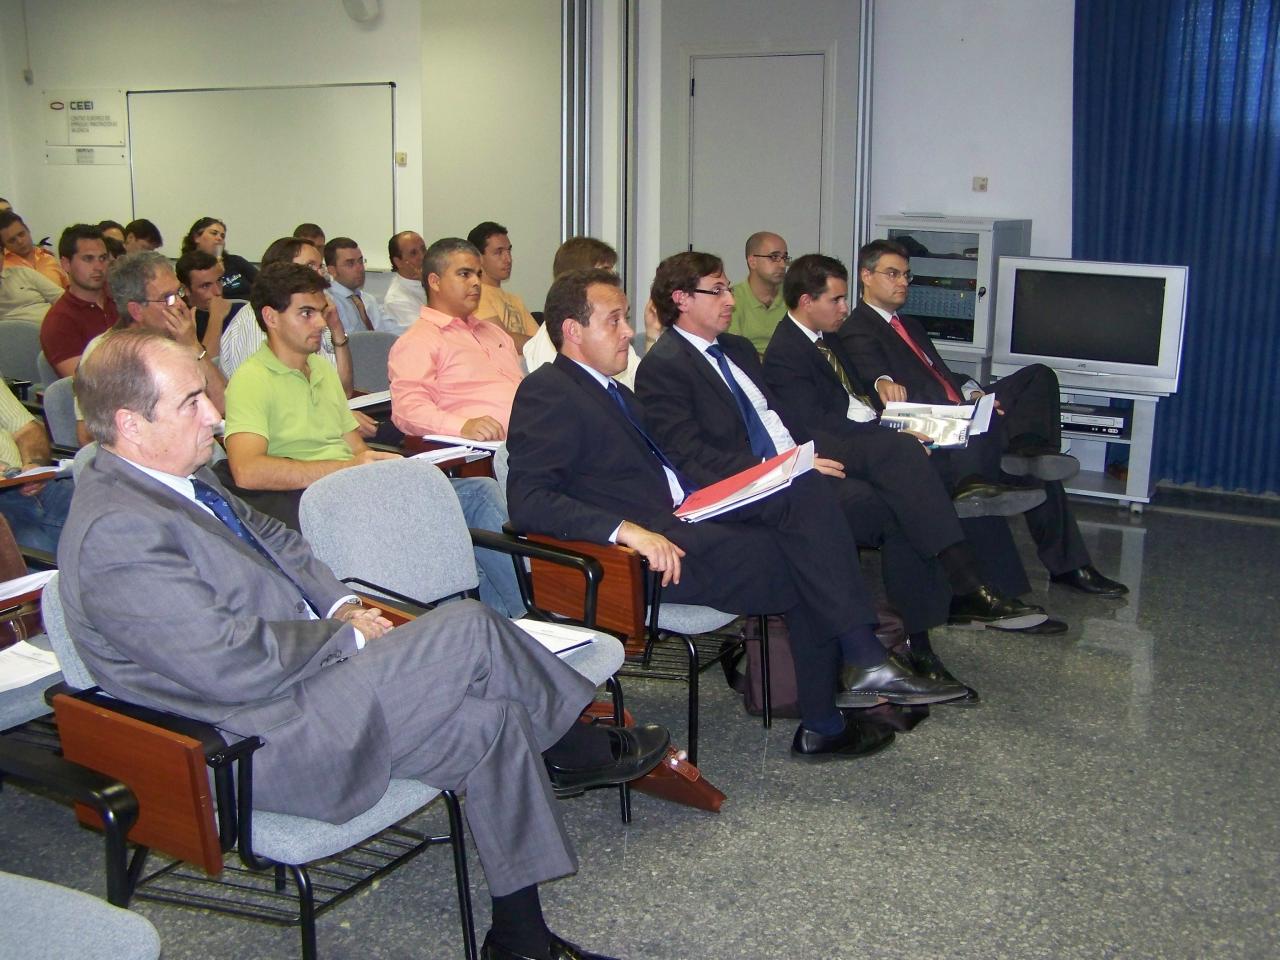 Vista asistentes al foro de financiacin 2008 CEEI Valencia